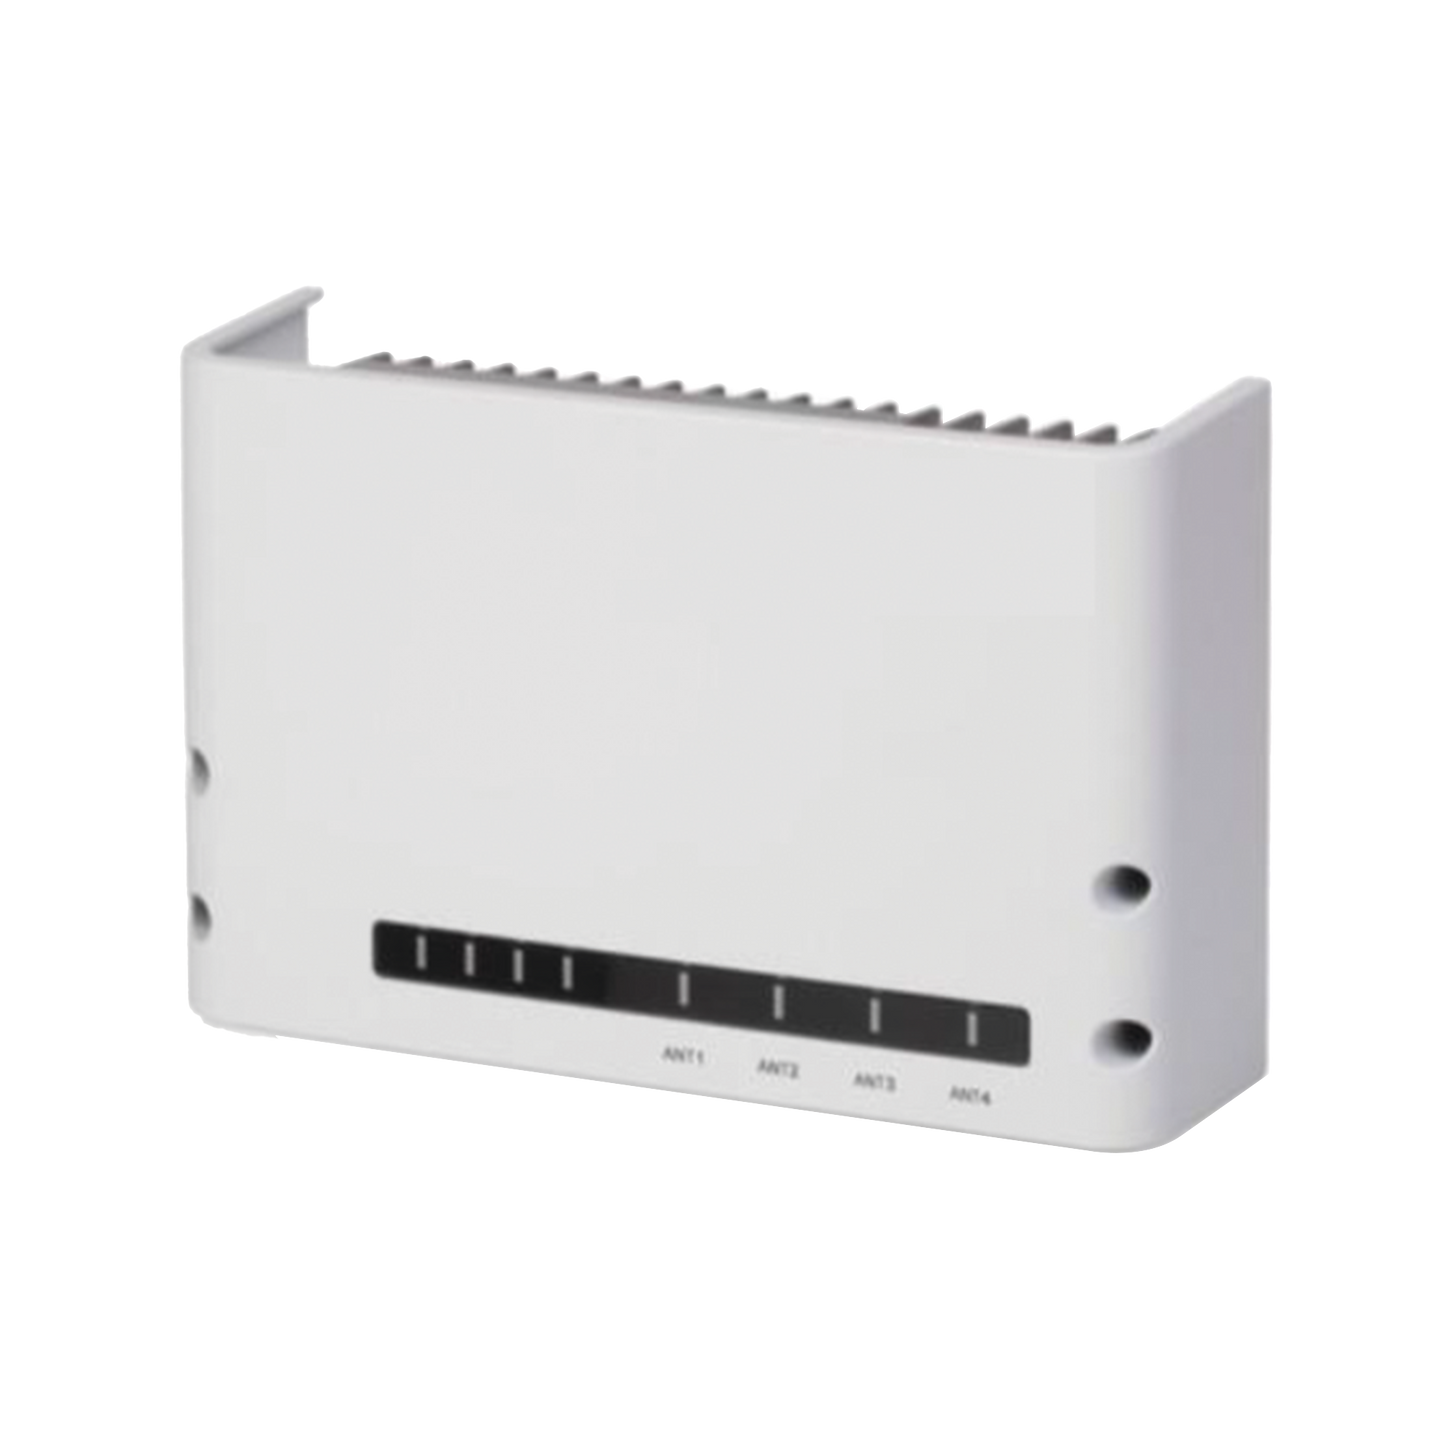 Concentrador Inteligente para Antenas UHF IBERNEX / Soporta 4 antenas NX9781 / Solución de control de errantes